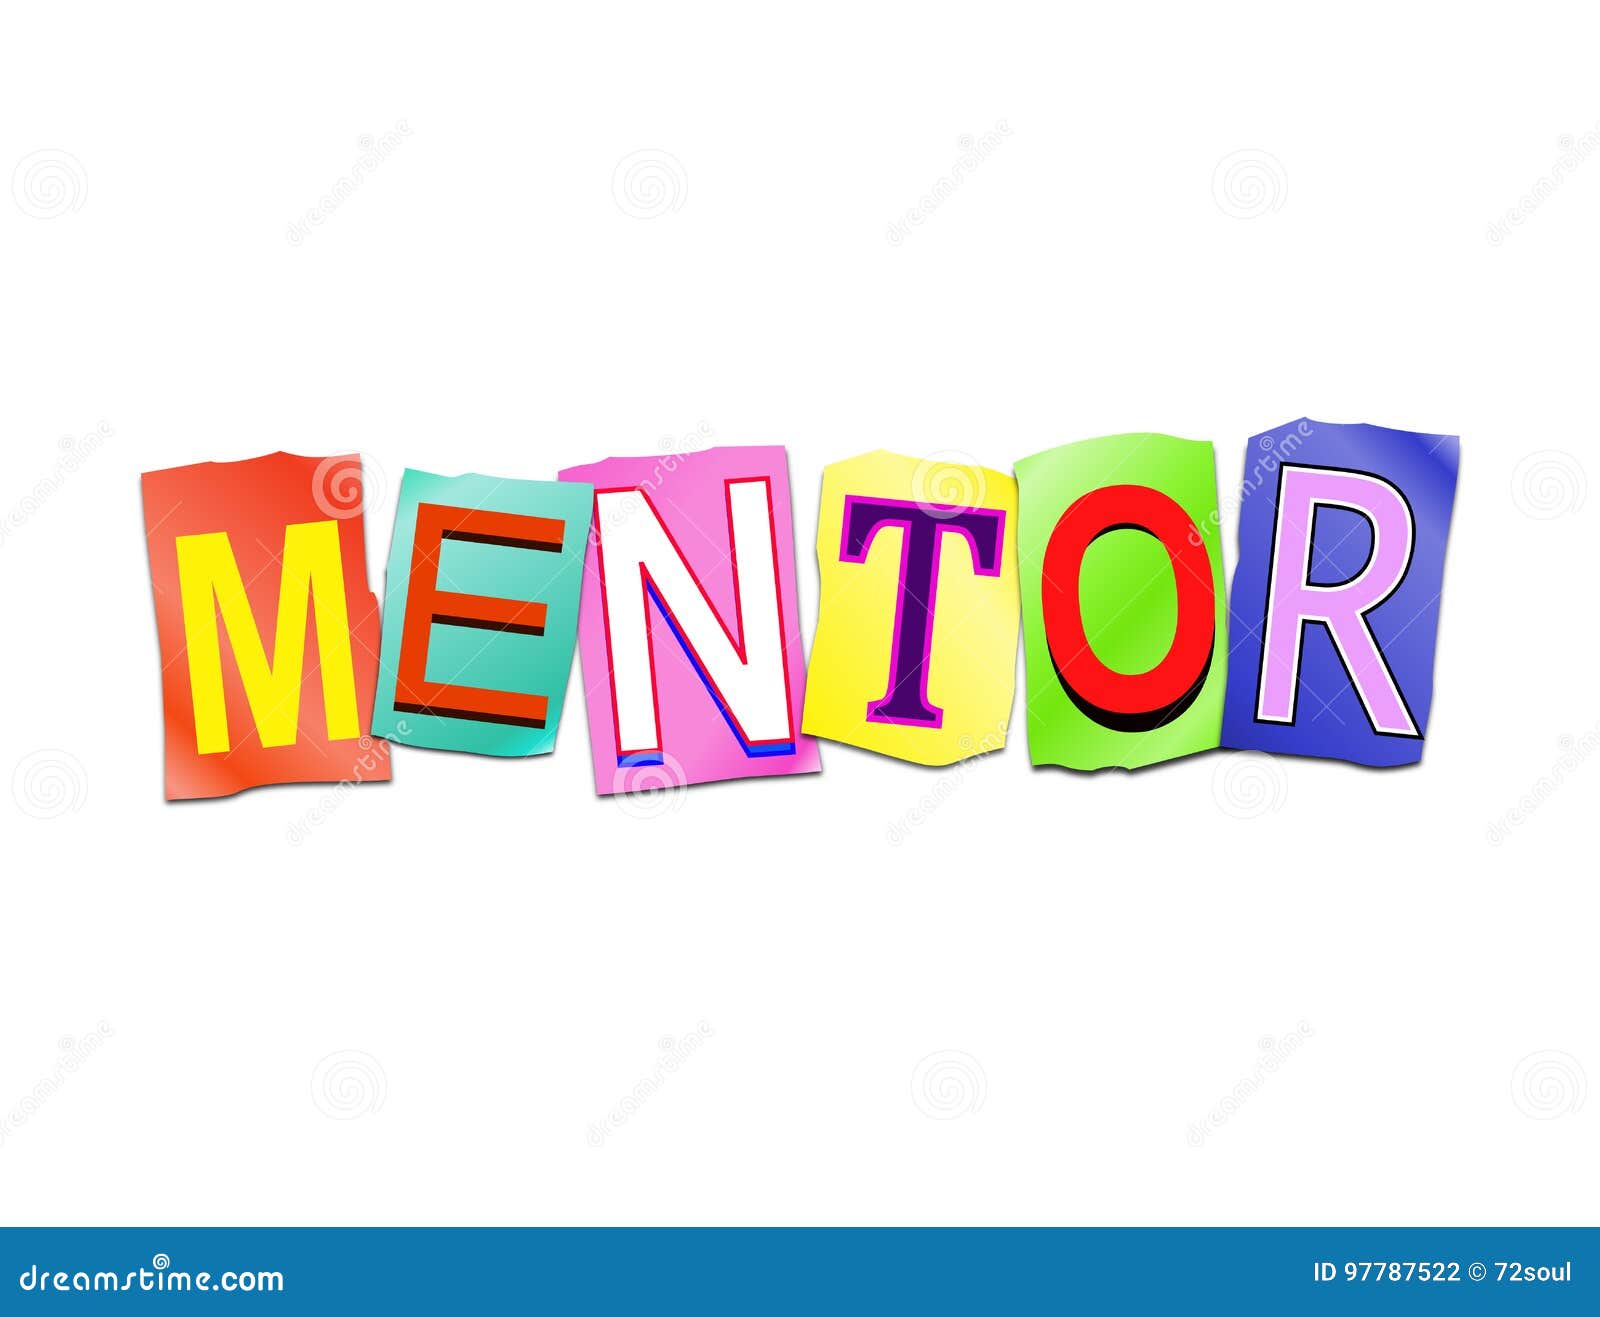 Mentor word concept. Illustration adviser - 97787522